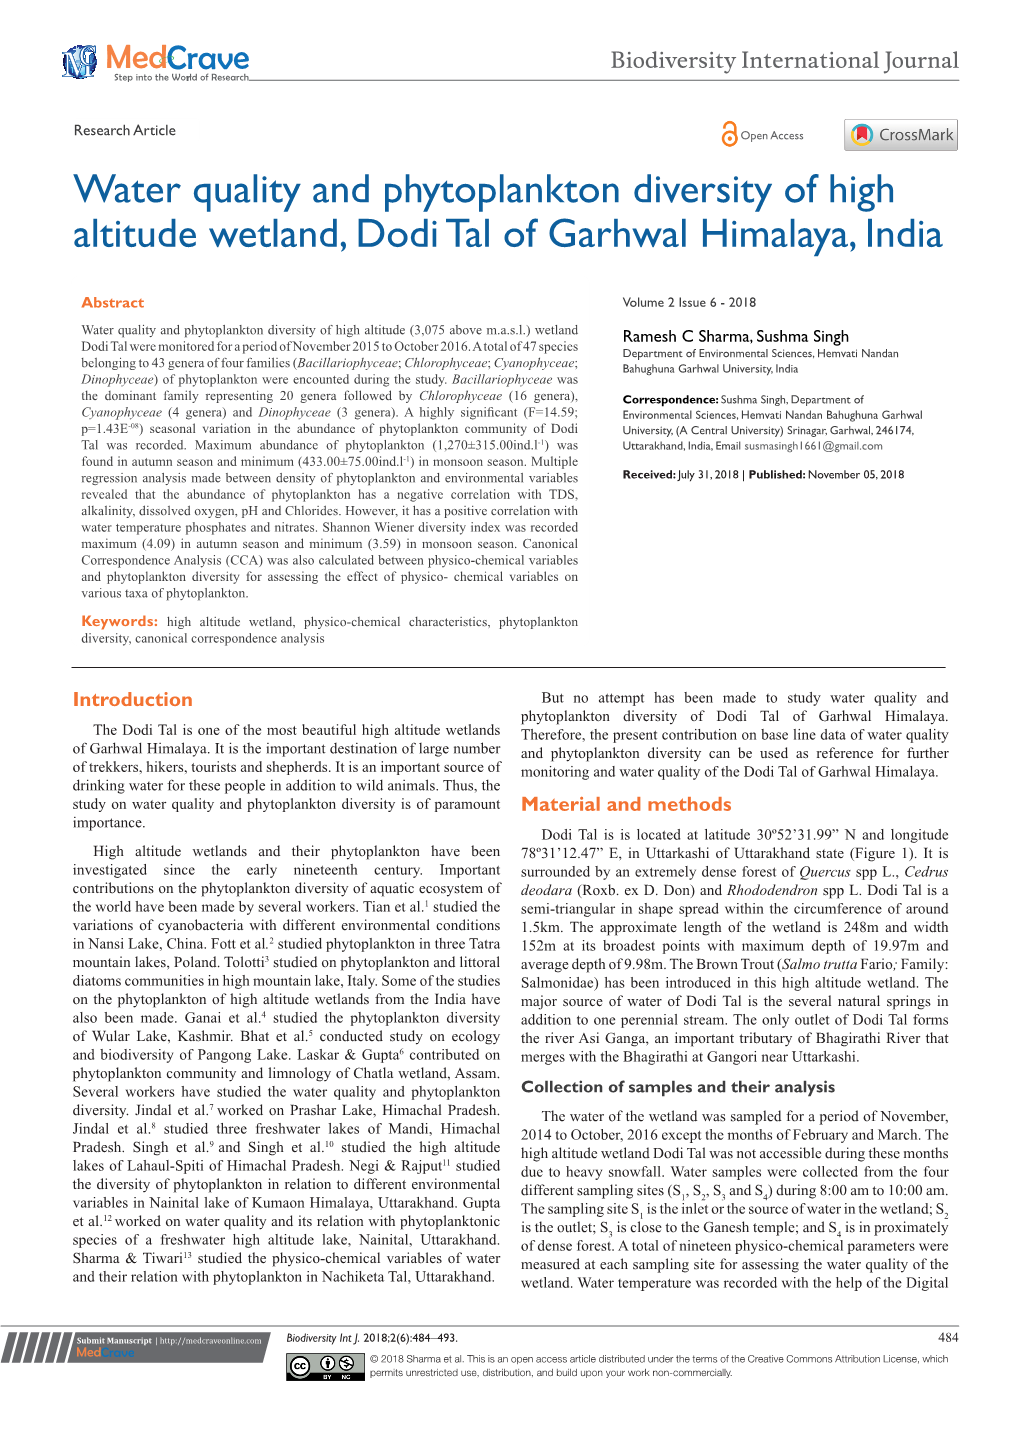 Water Quality and Phytoplankton Diversity of High Altitude Wetland, Dodi Tal of Garhwal Himalaya, India